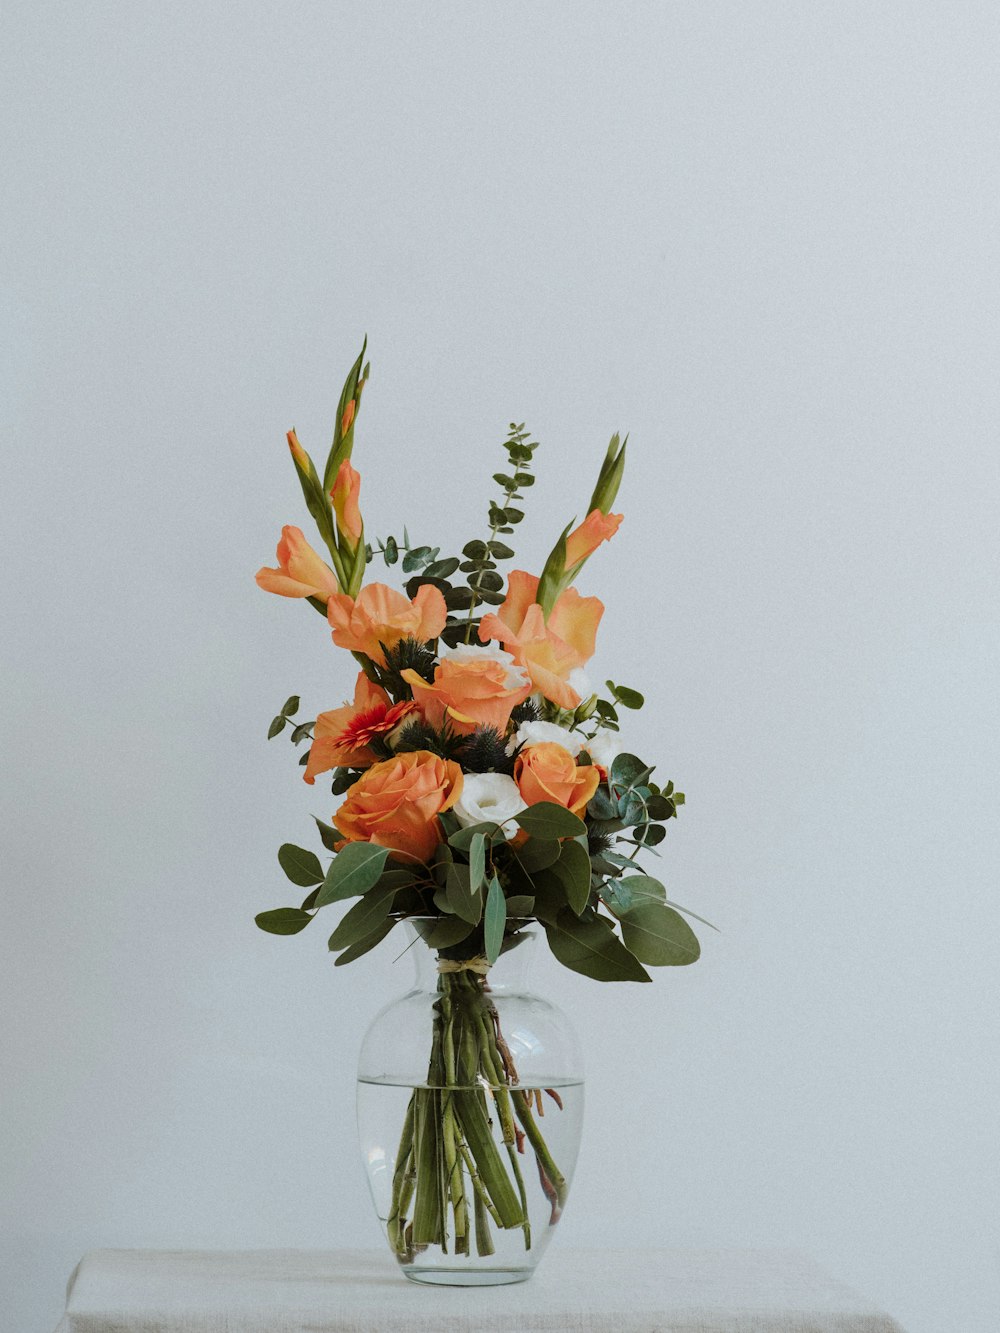 orange flowers in clear glass vase photo – Free Flower Image on Unsplash